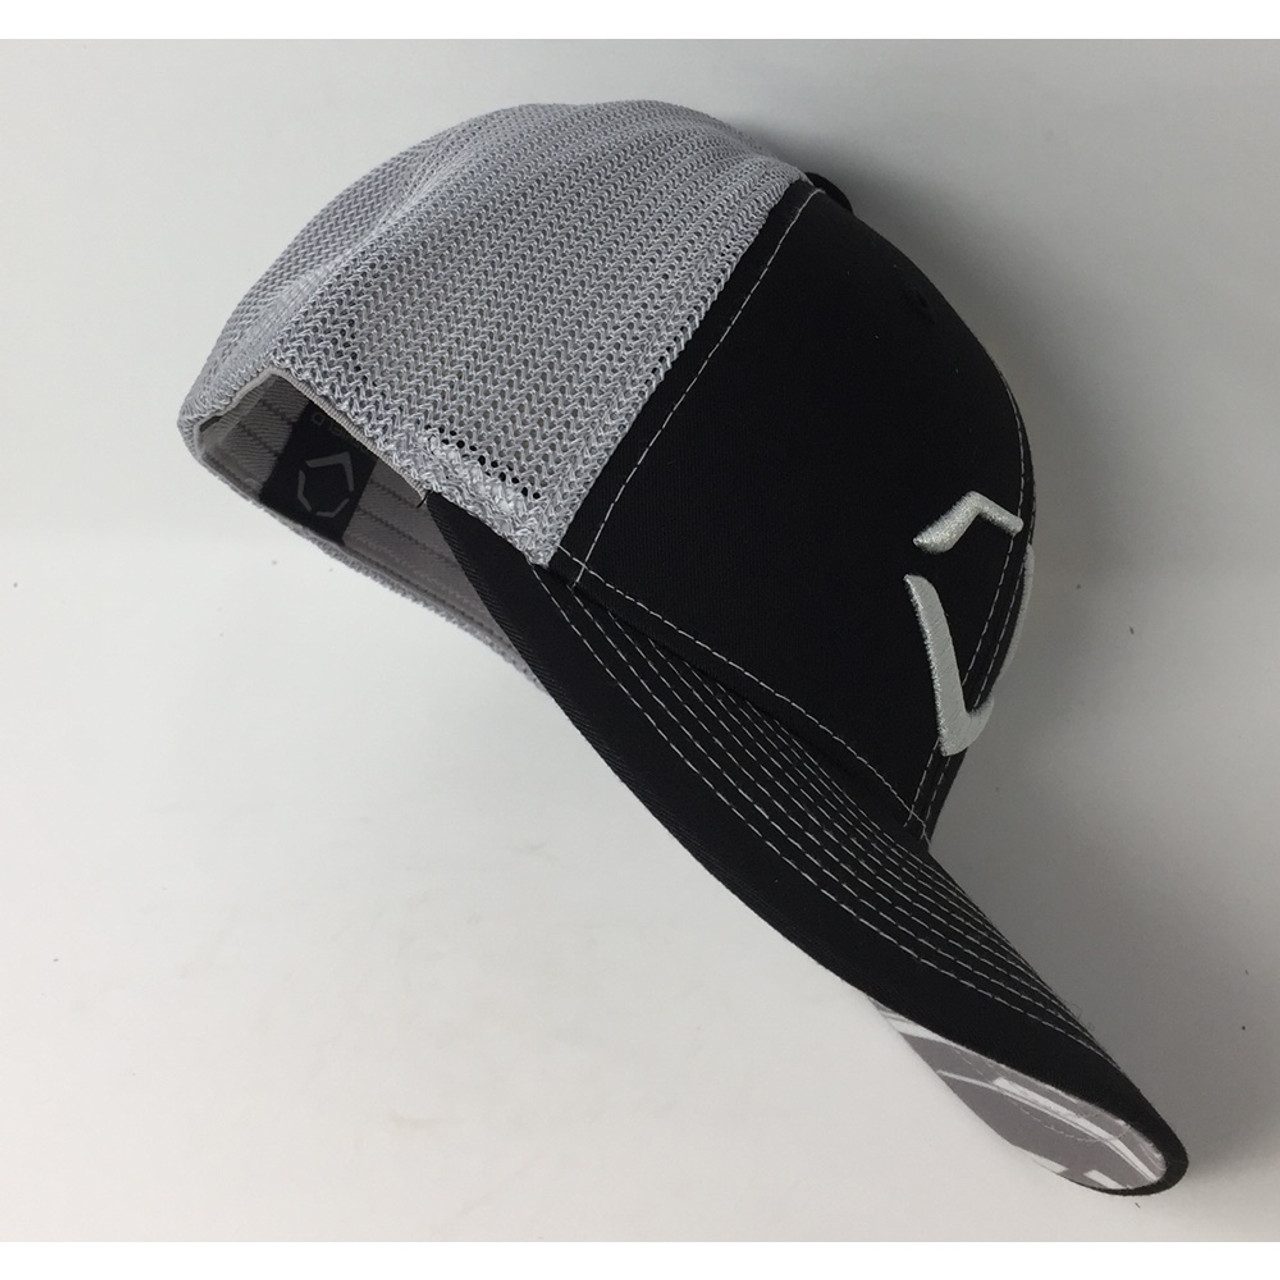 Louisville Slugger Shield Flex Fit Hat Cap Relaxed Mesh Back Baseball (S-M)  